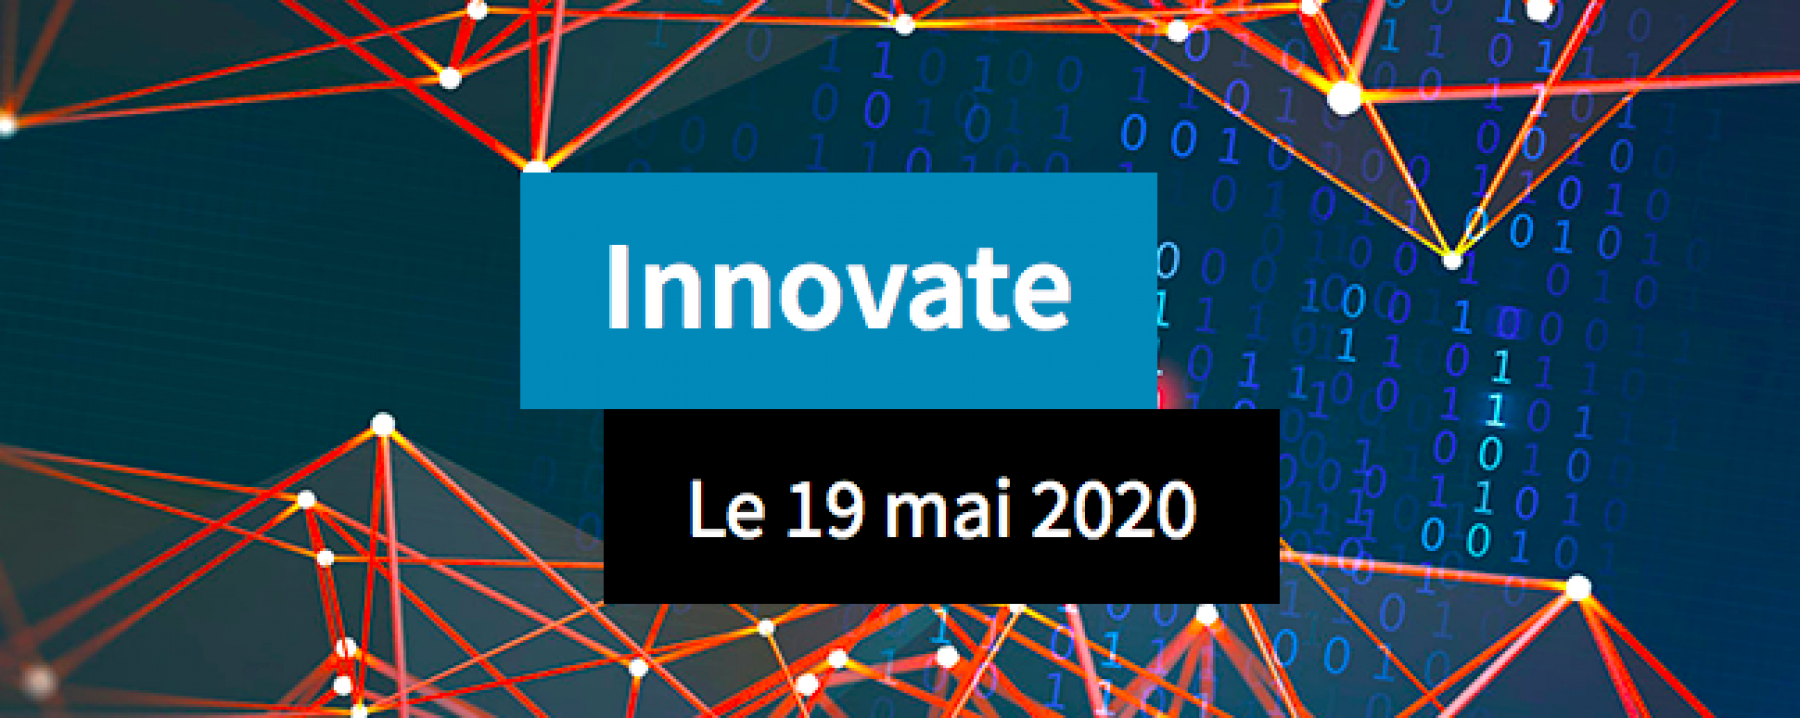 Webinar Innovate, organisé par Proximum Group, le 19 mai 2020